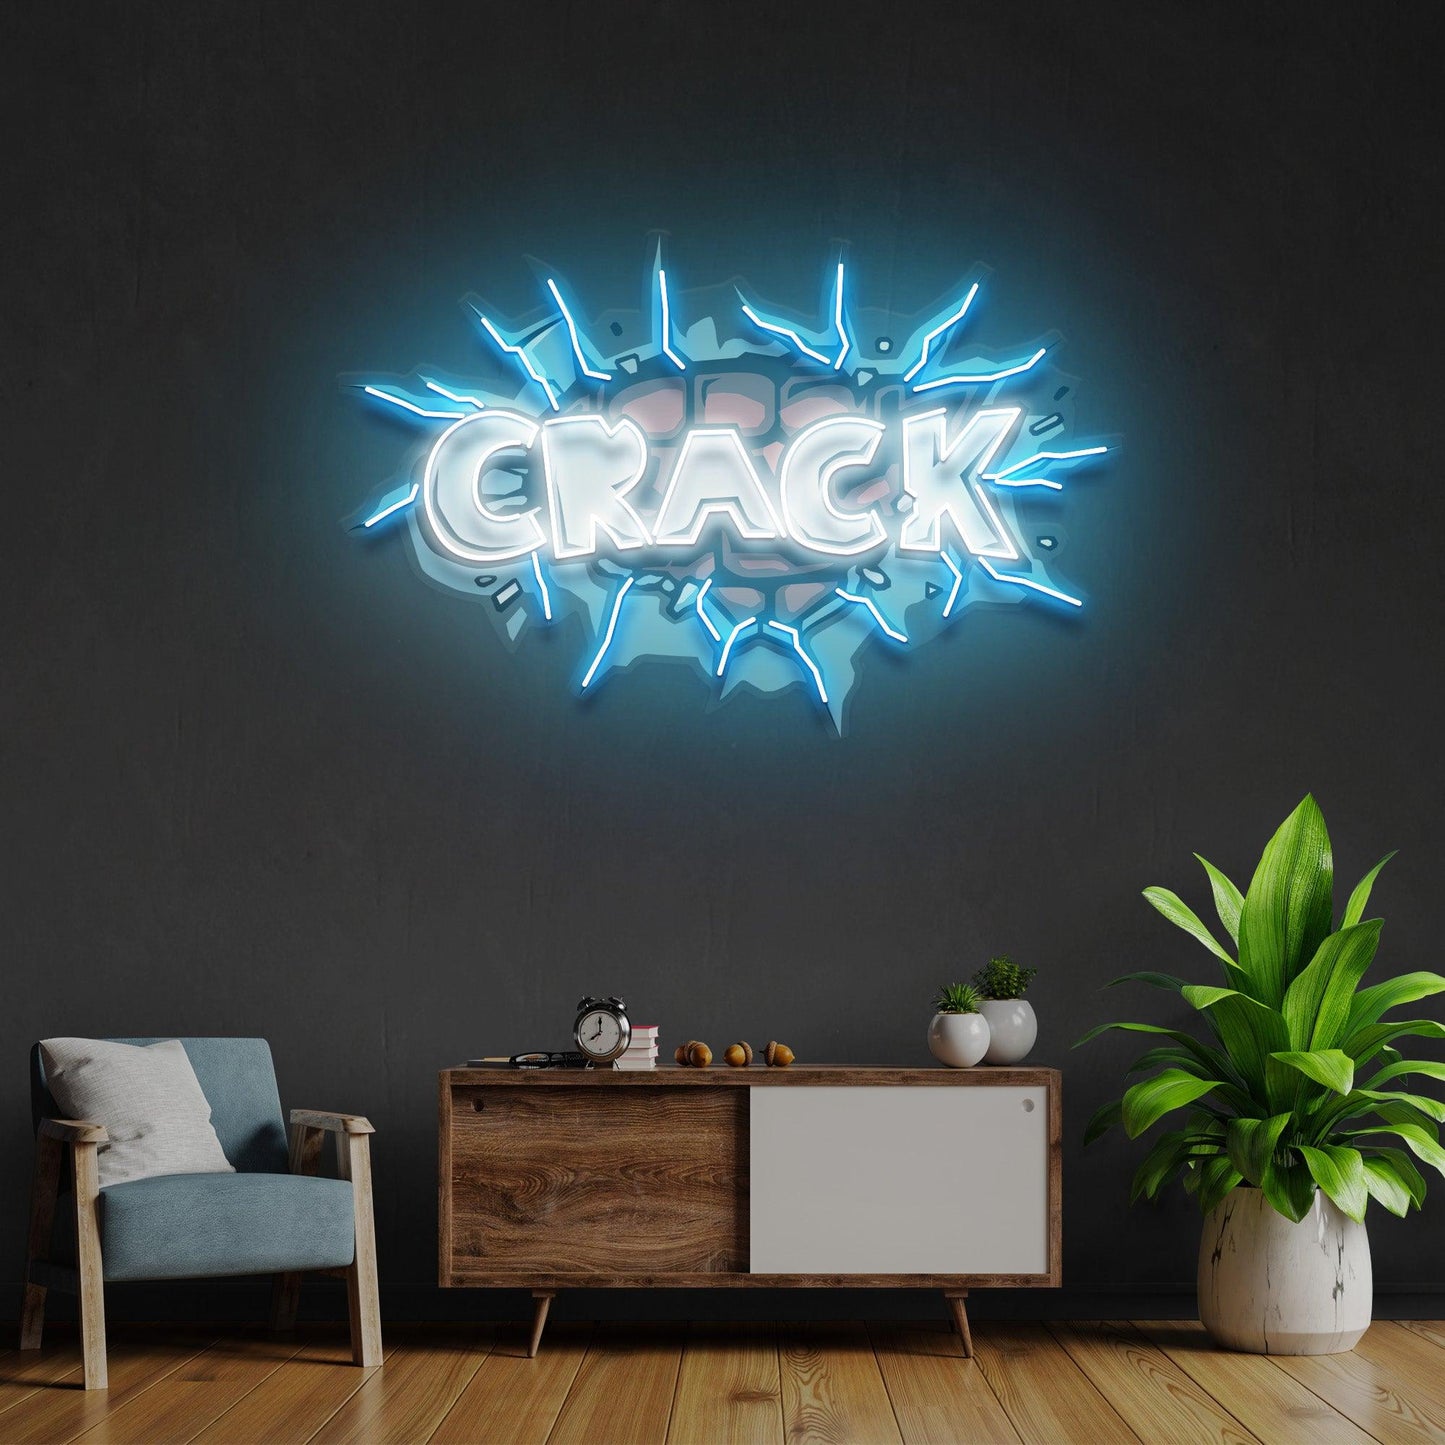 Crack Led Neon Acrylic Artwork - Neonzastudio